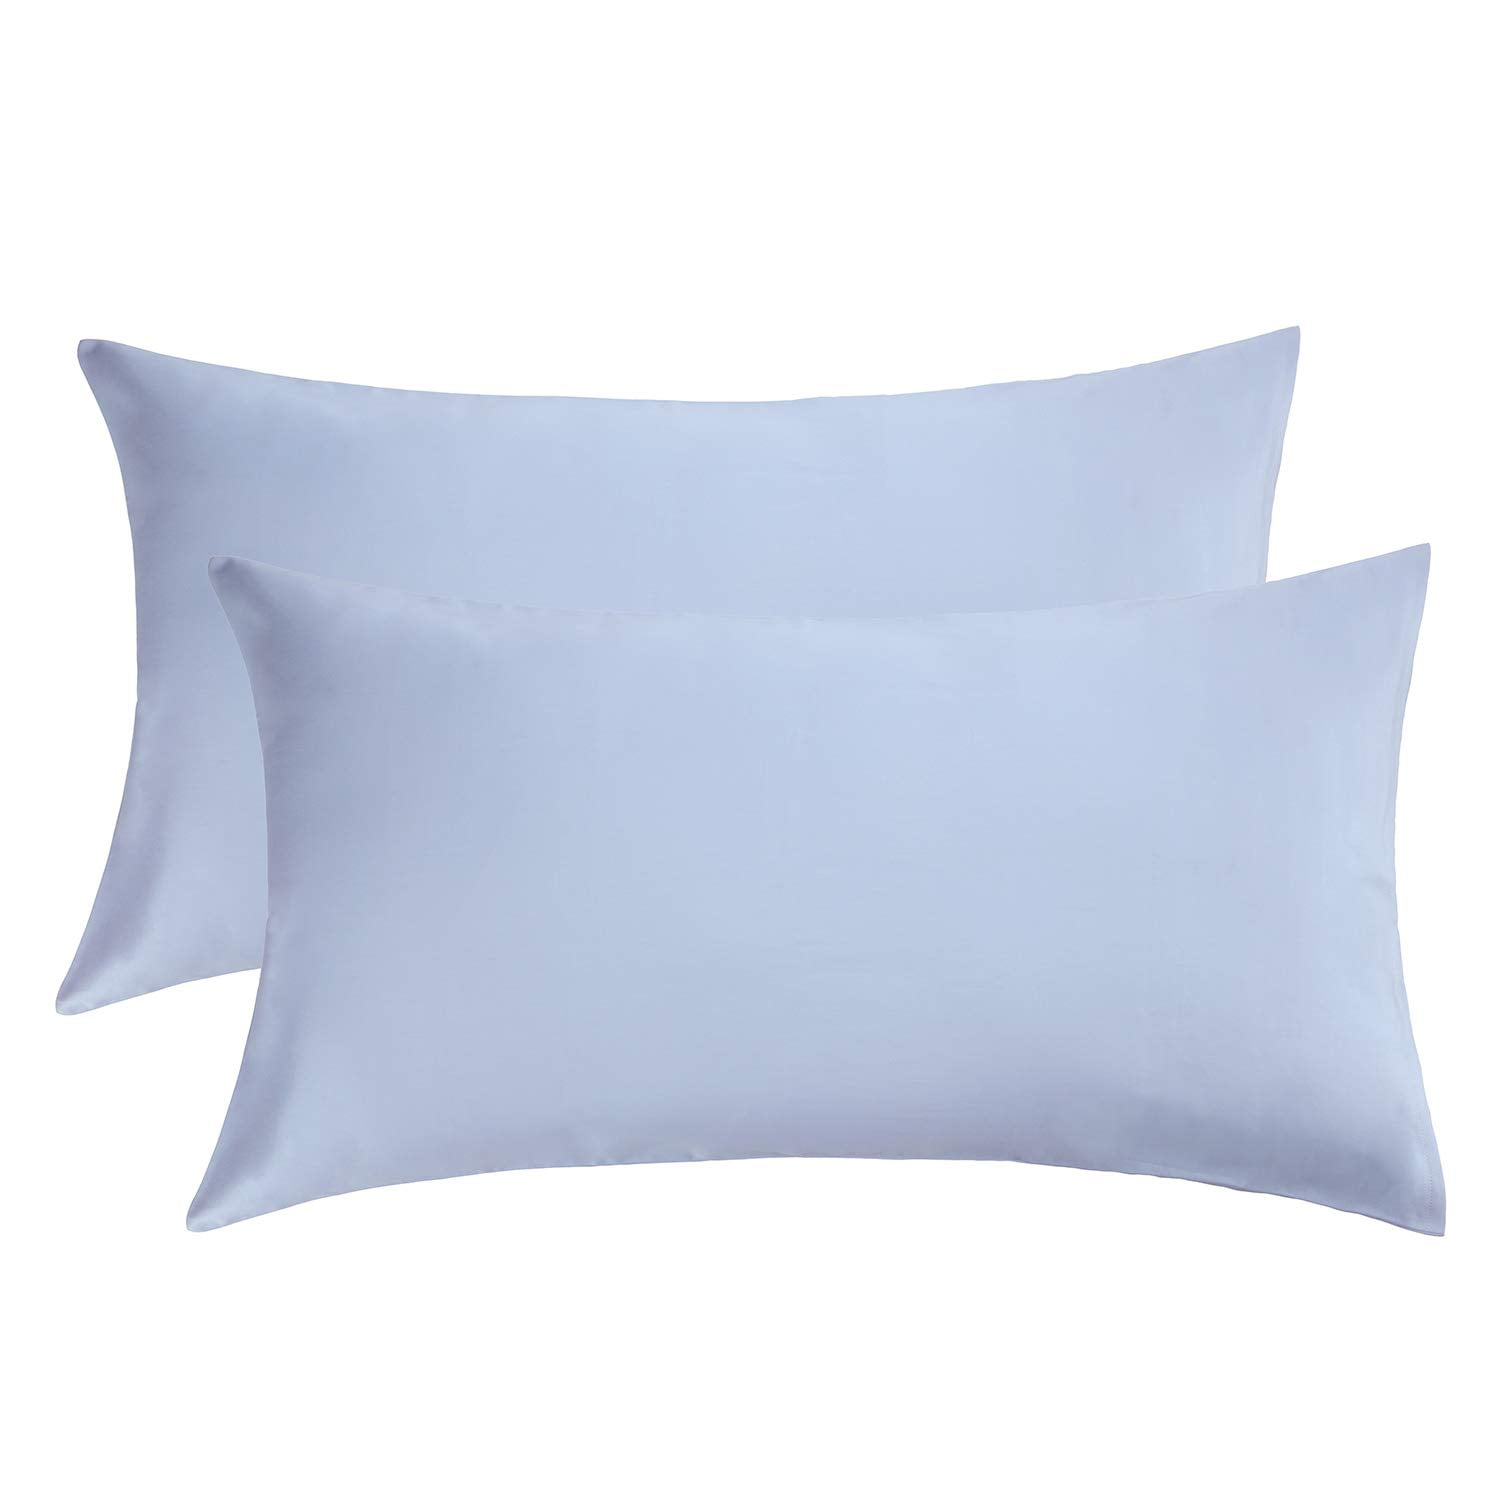  Gilbin 100% Jersey Knit Cotton & Ultra Soft Pillowcase,  Standard Size - Set of 2 Pillow Cases Navy : Home & Kitchen